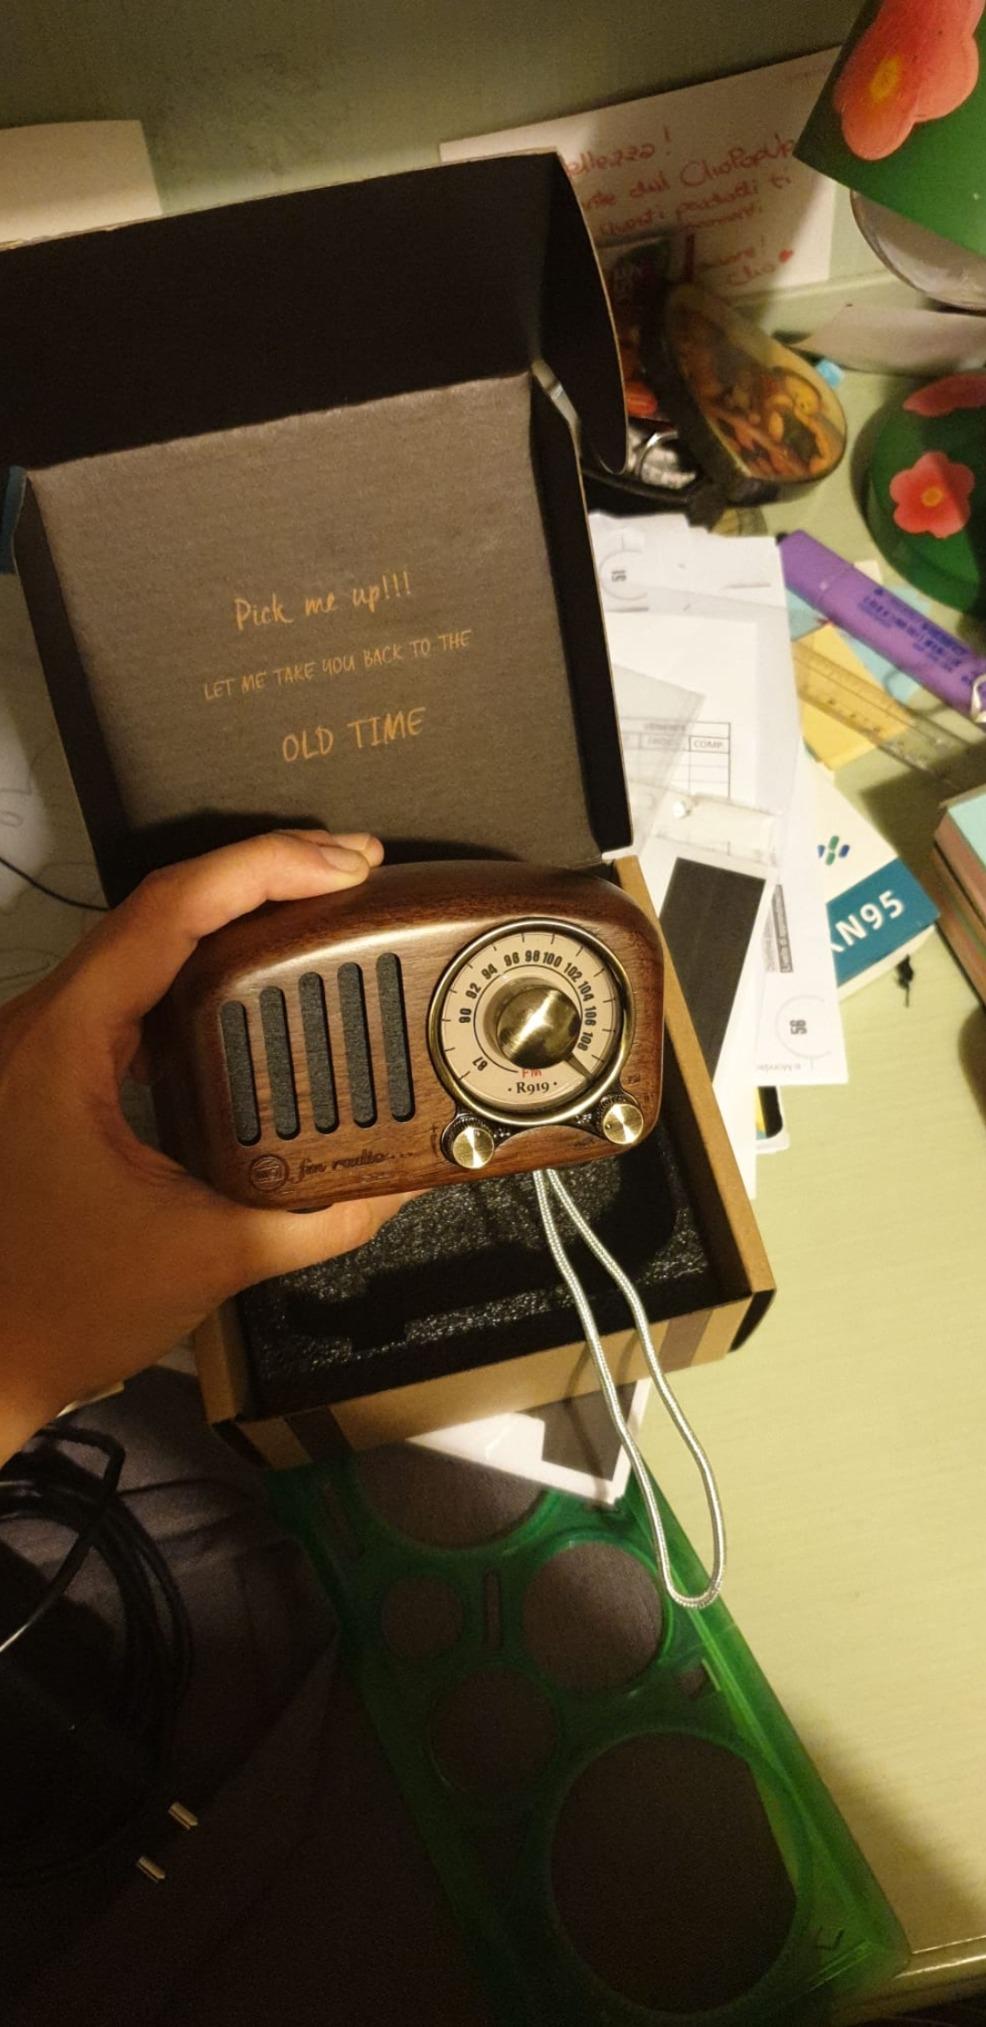 Vintage Radio Retro Bluetooth Speaker photo review